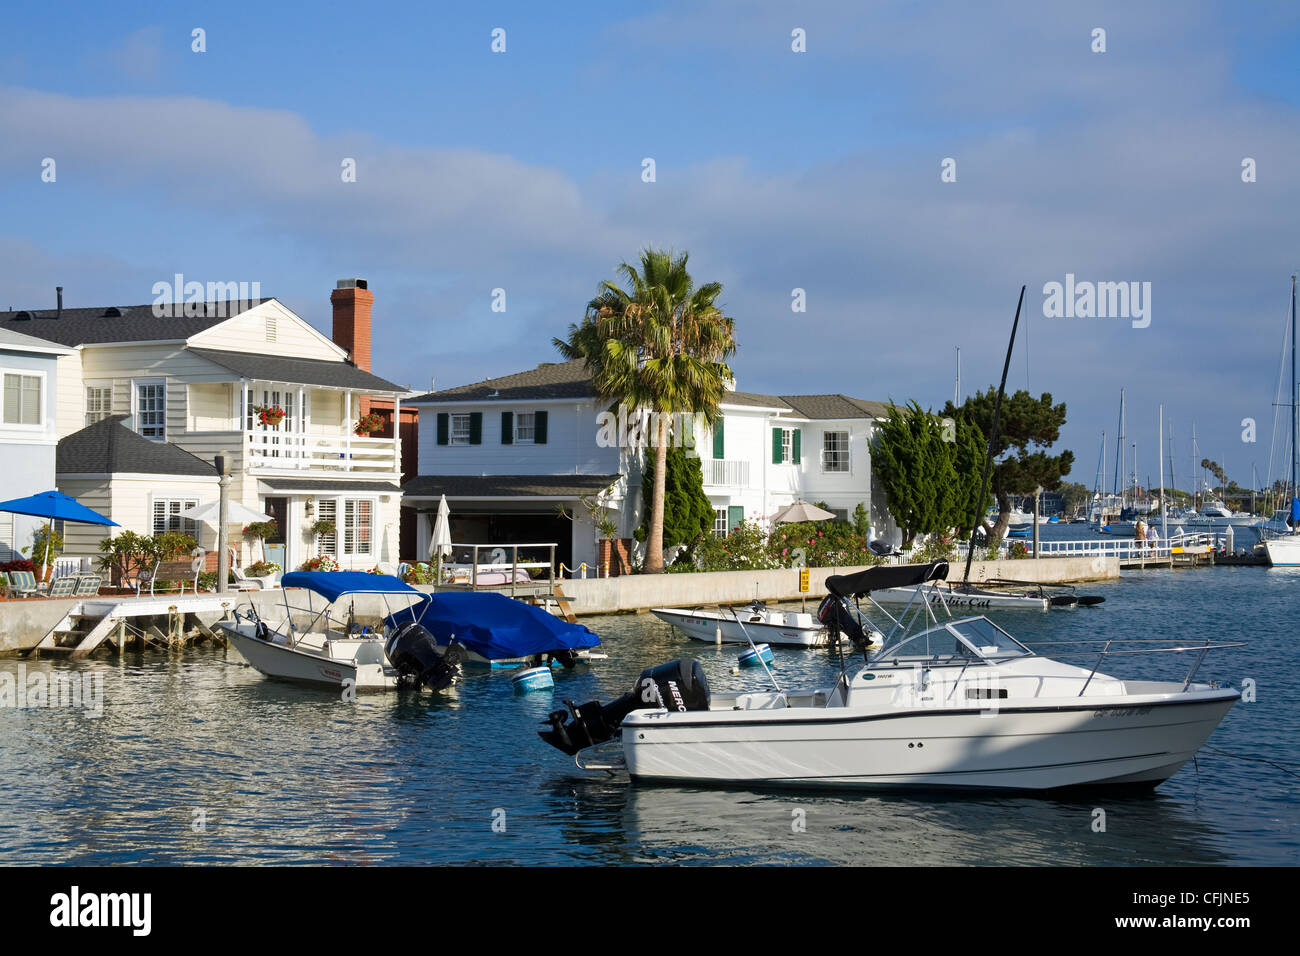 Canal Grande auf Balboa Island, Newport Beach, Orange County, California, Vereinigte Staaten von Amerika, Nordamerika Stockfoto